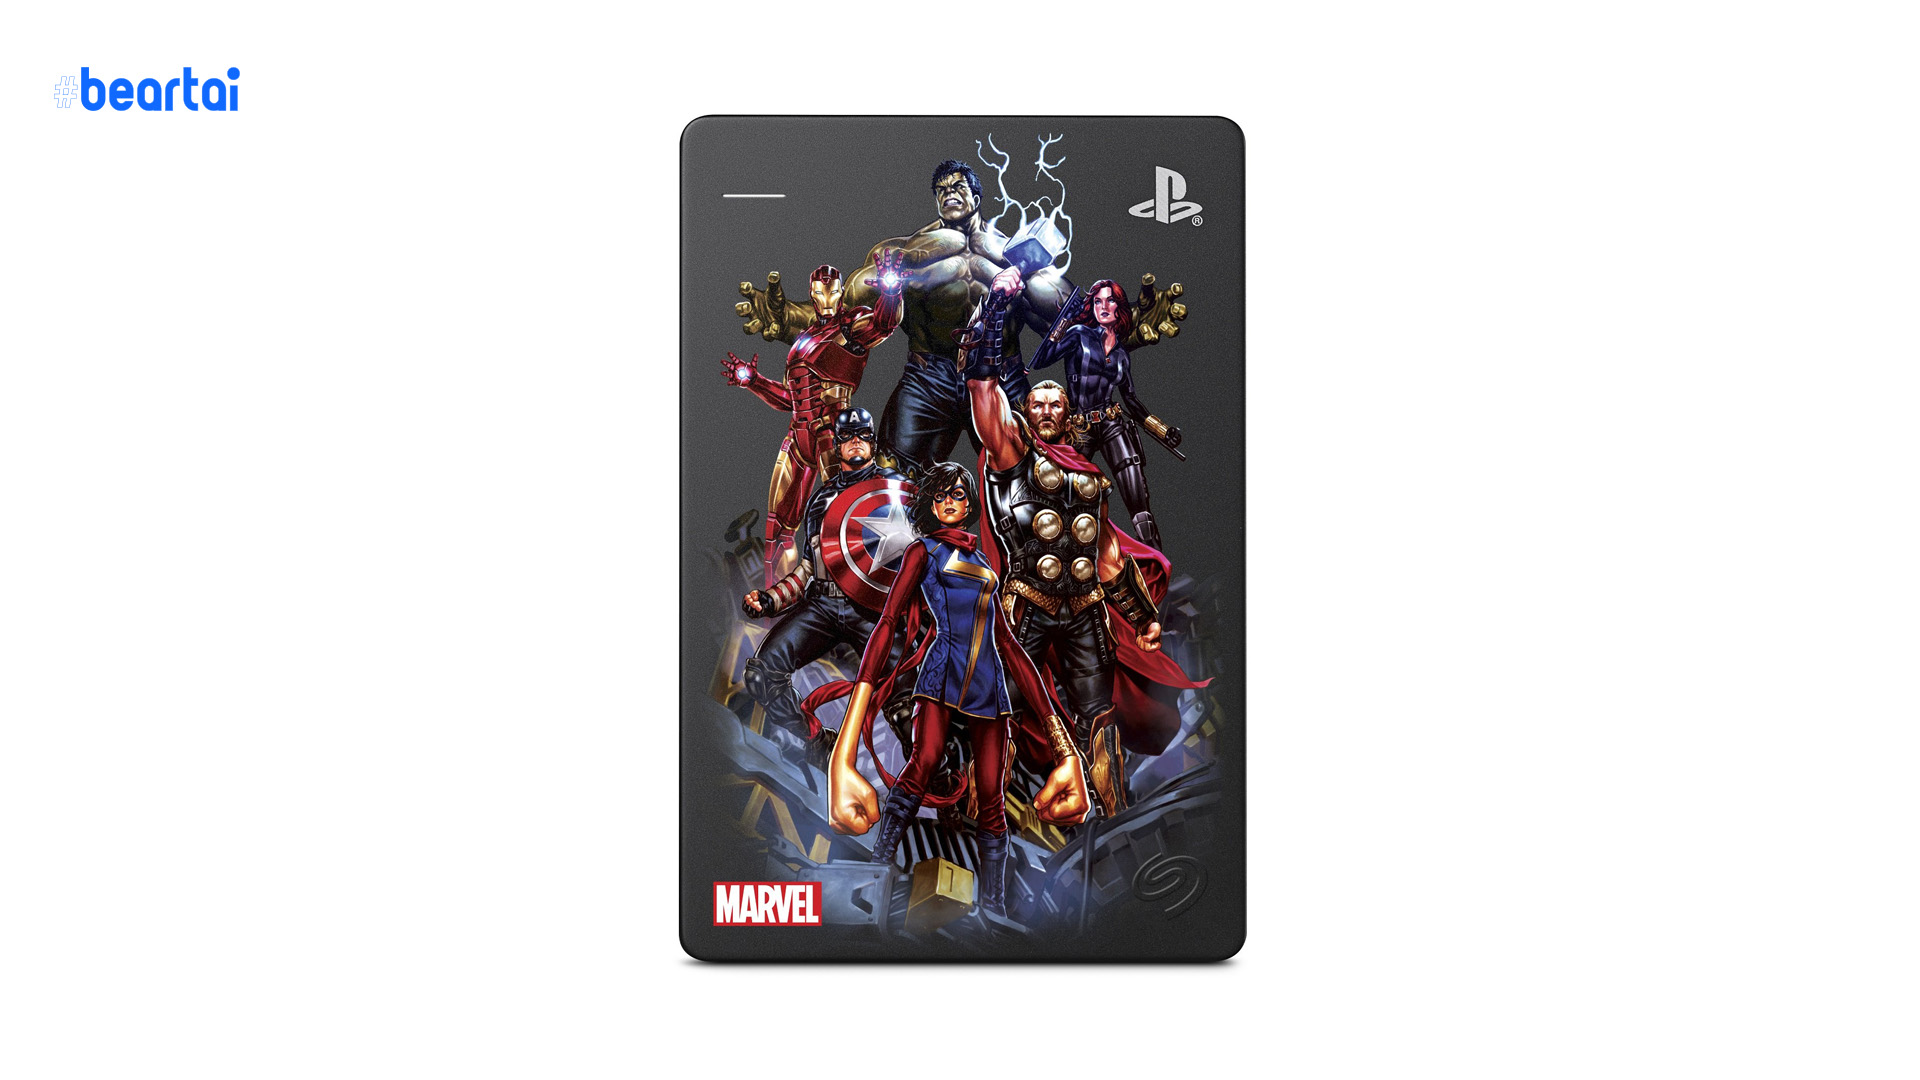 Seagate เปิดตัวเกมไดรฟ์รุ่นลิมิเต็ด “Marvel Avengers Limited Edition สำหรับ PS4